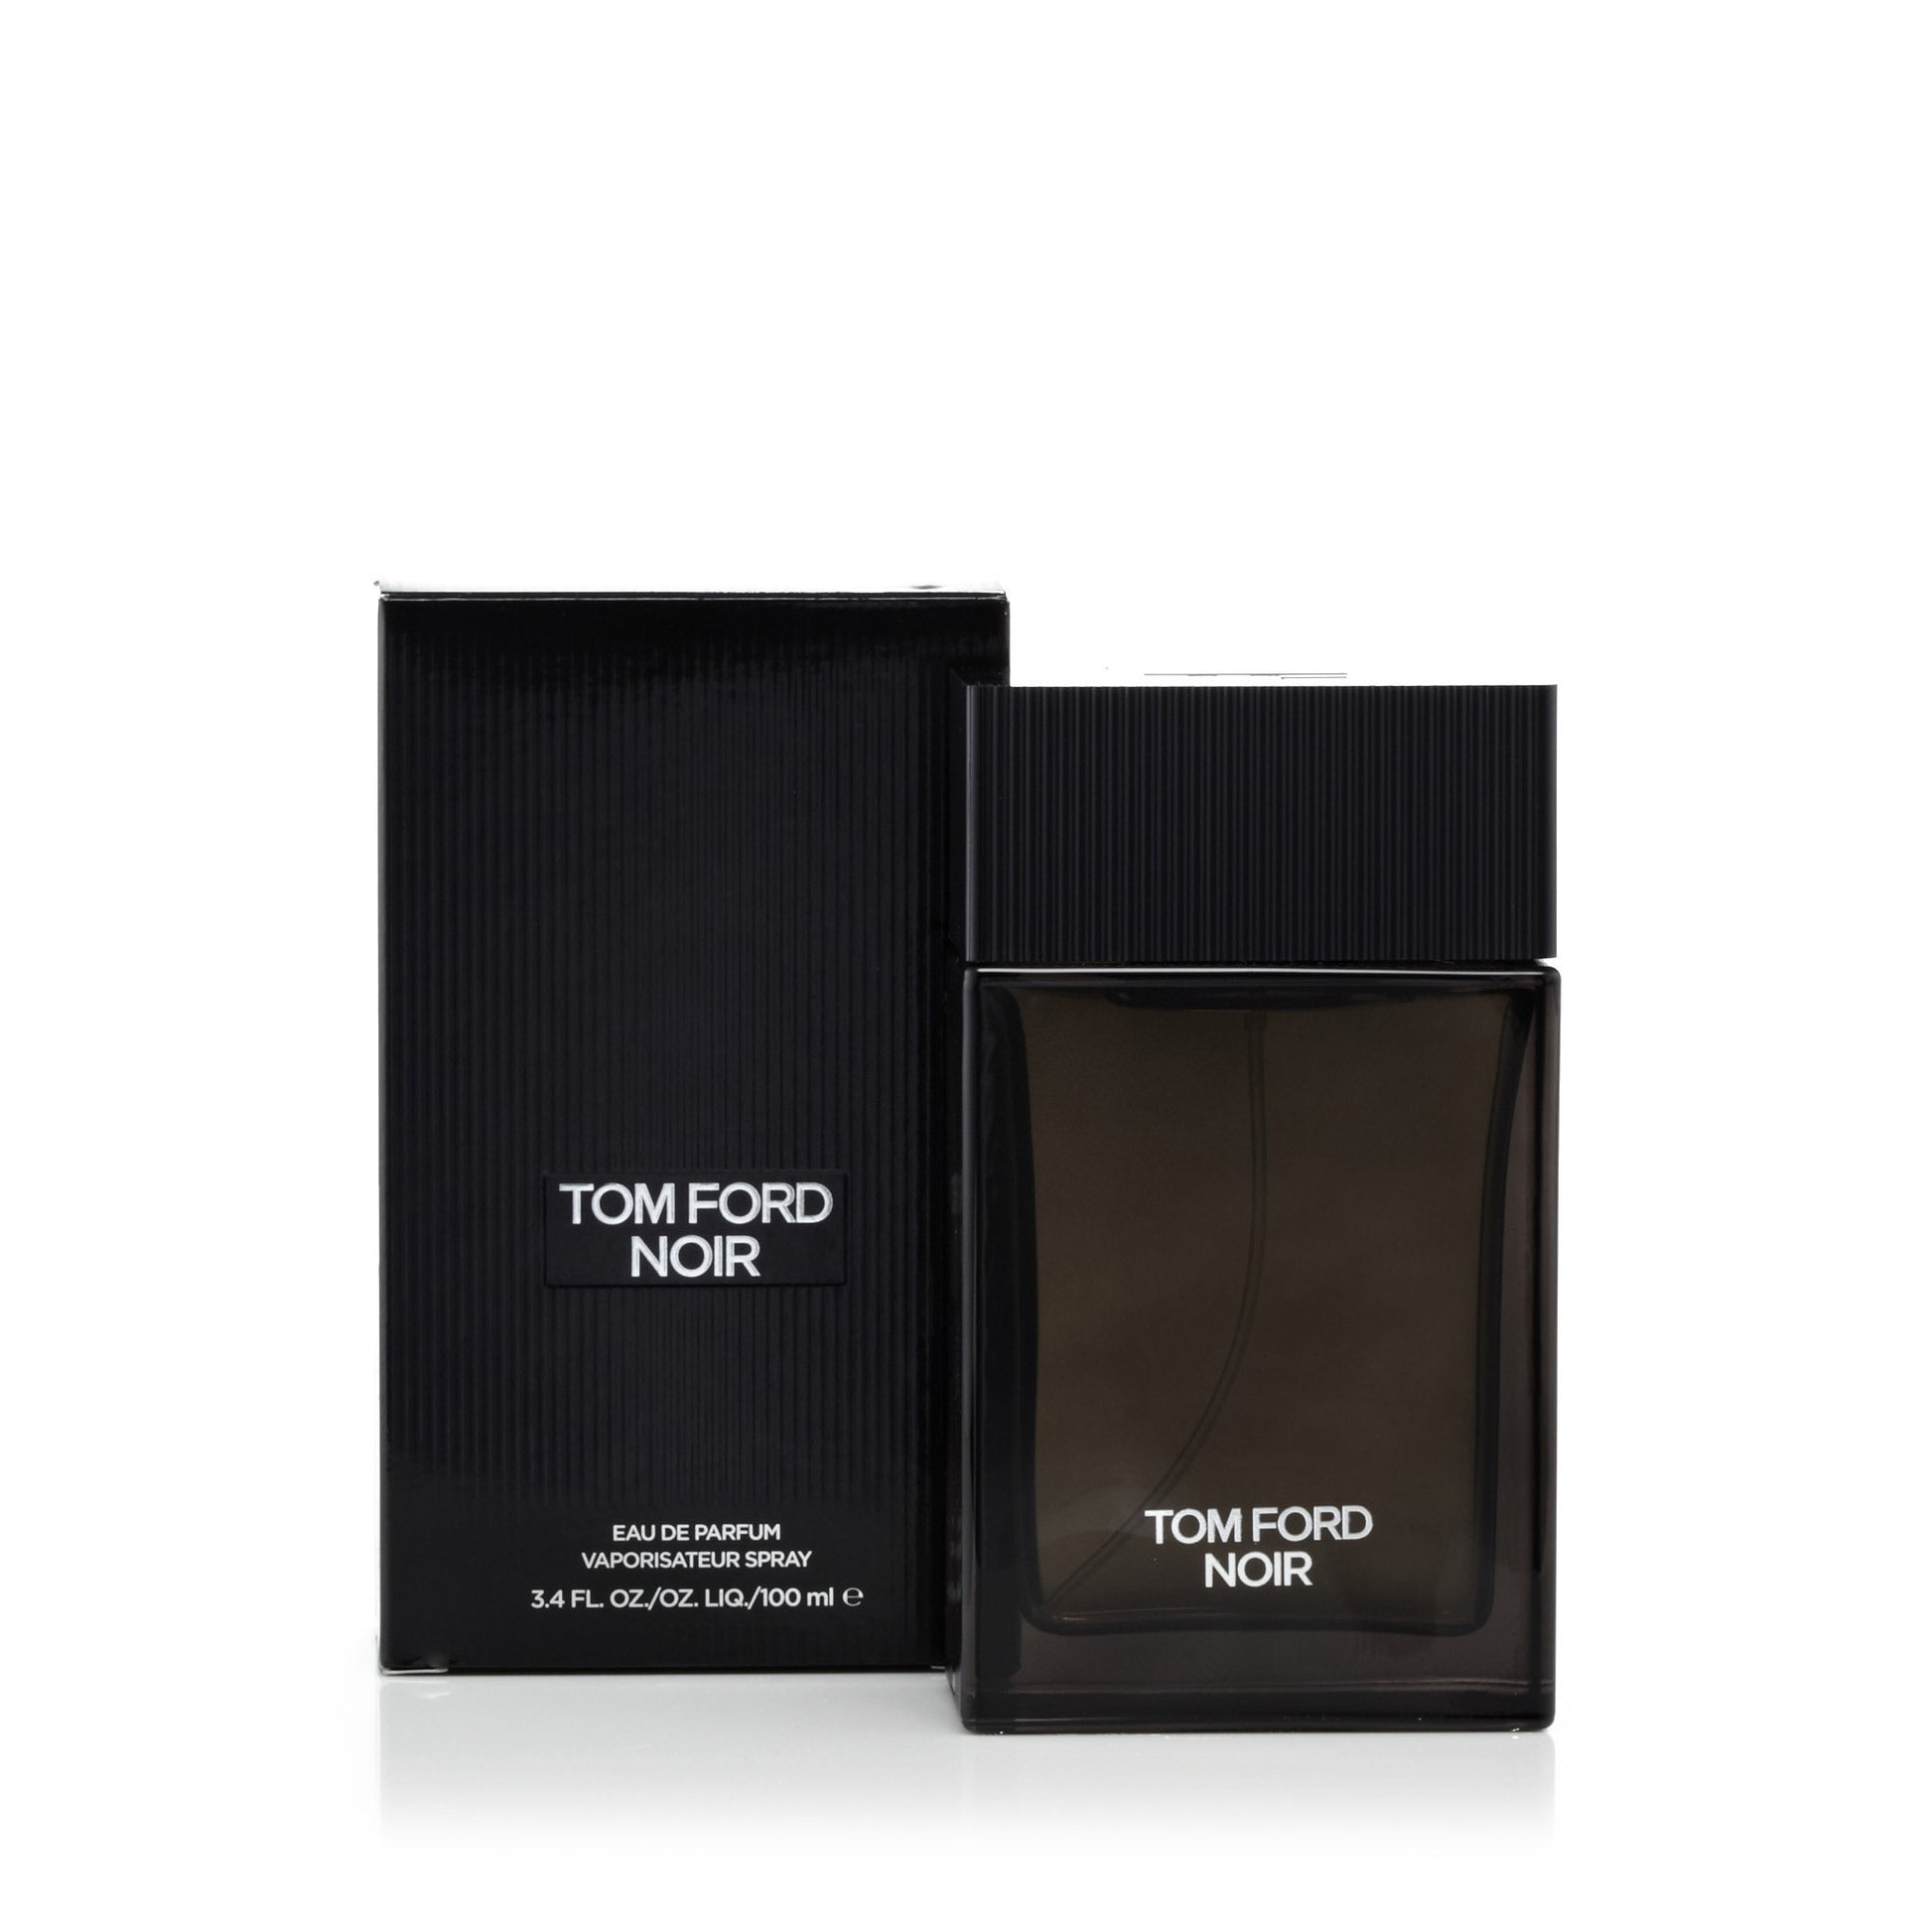 Tom Ford Noir Eau de Parfum Spray for Men by Tom Ford, Product image 1